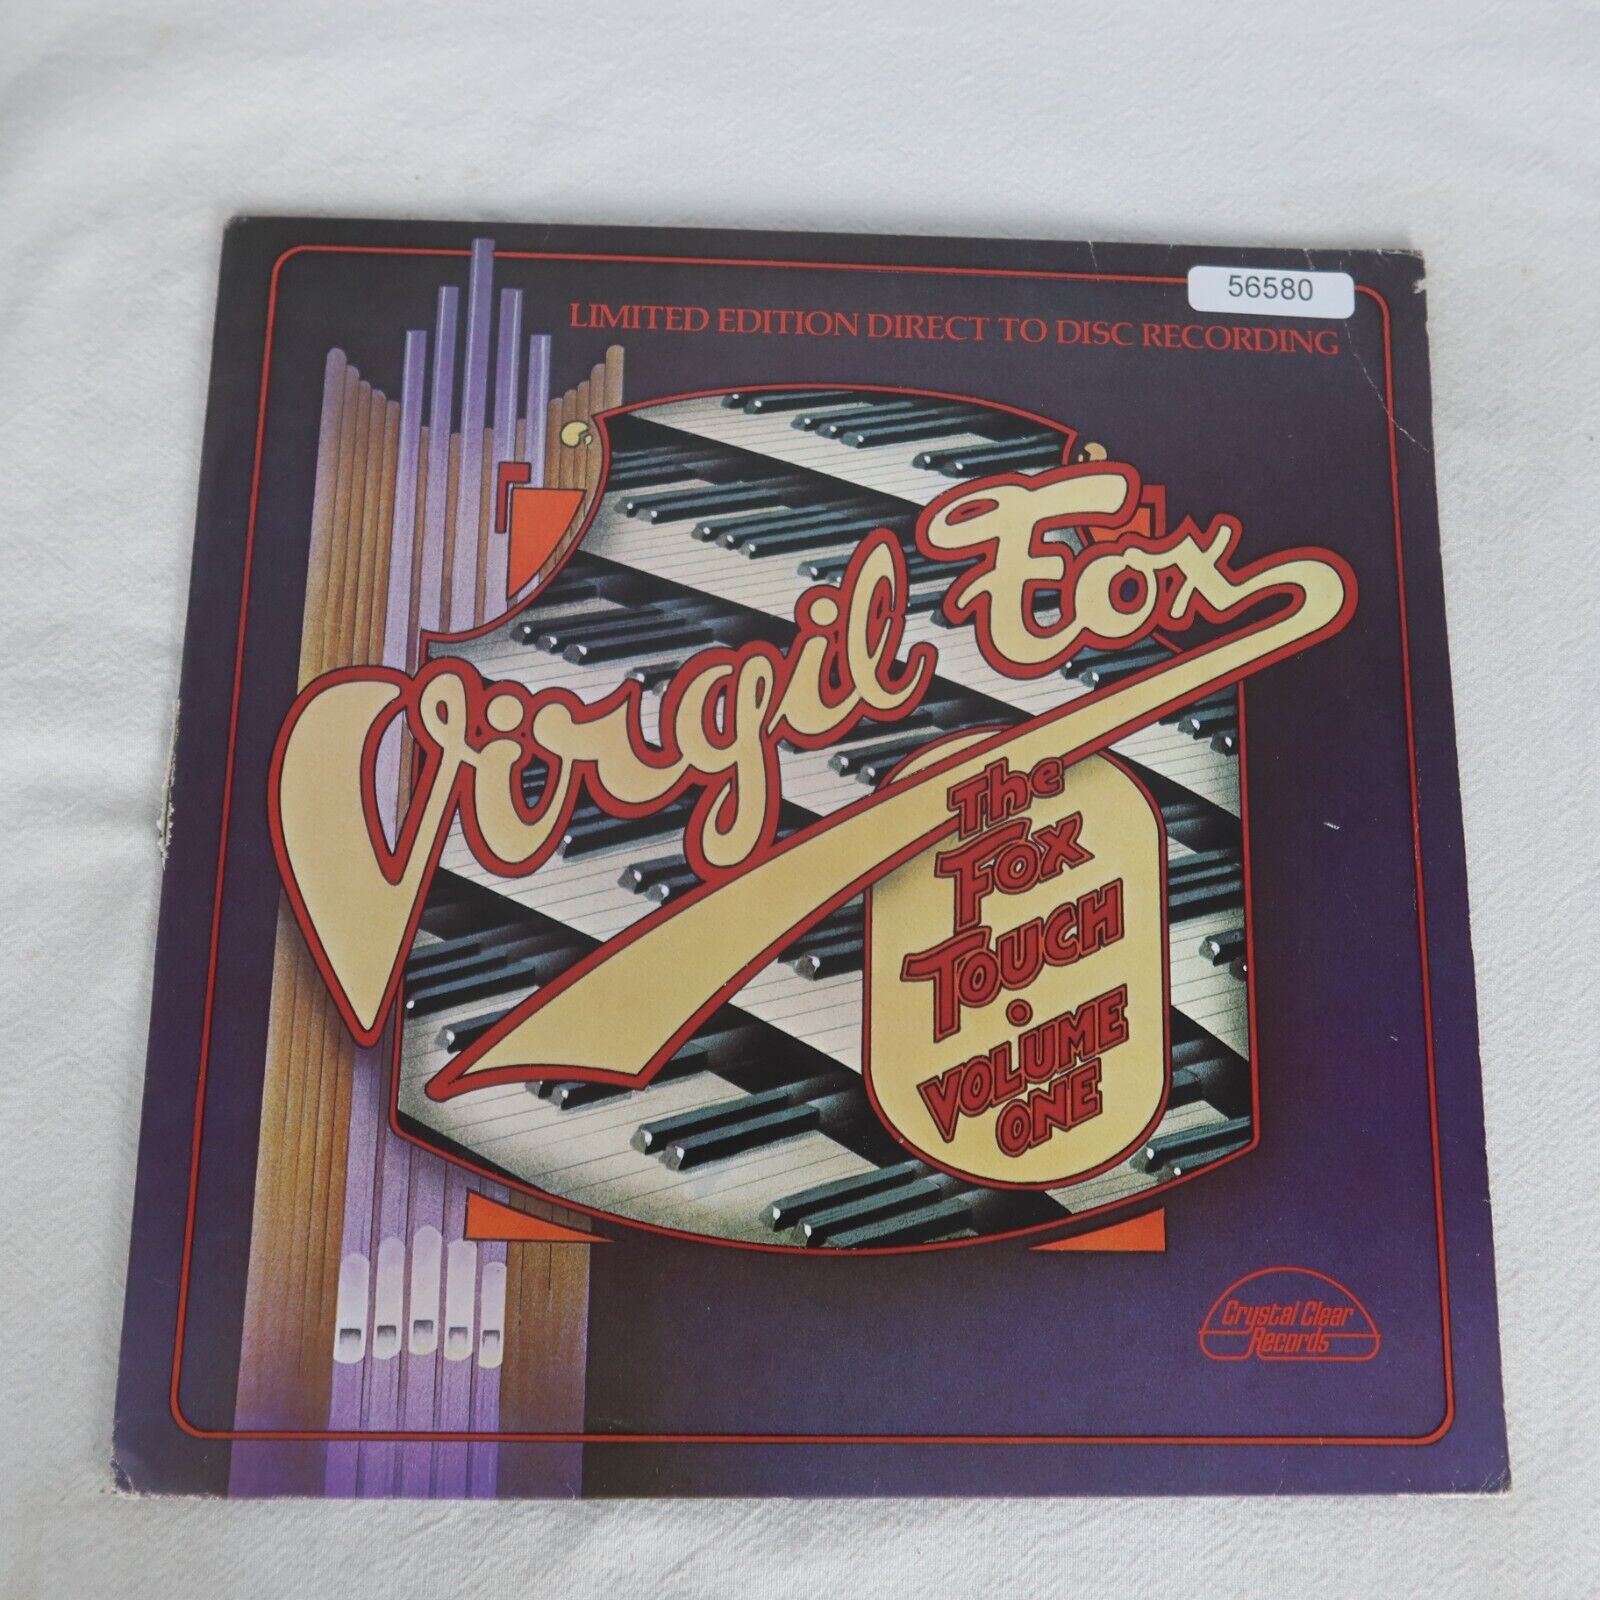 Virgil Fox The Fox Touch Vol 1 Limited Edition LP Vinyl Record Album